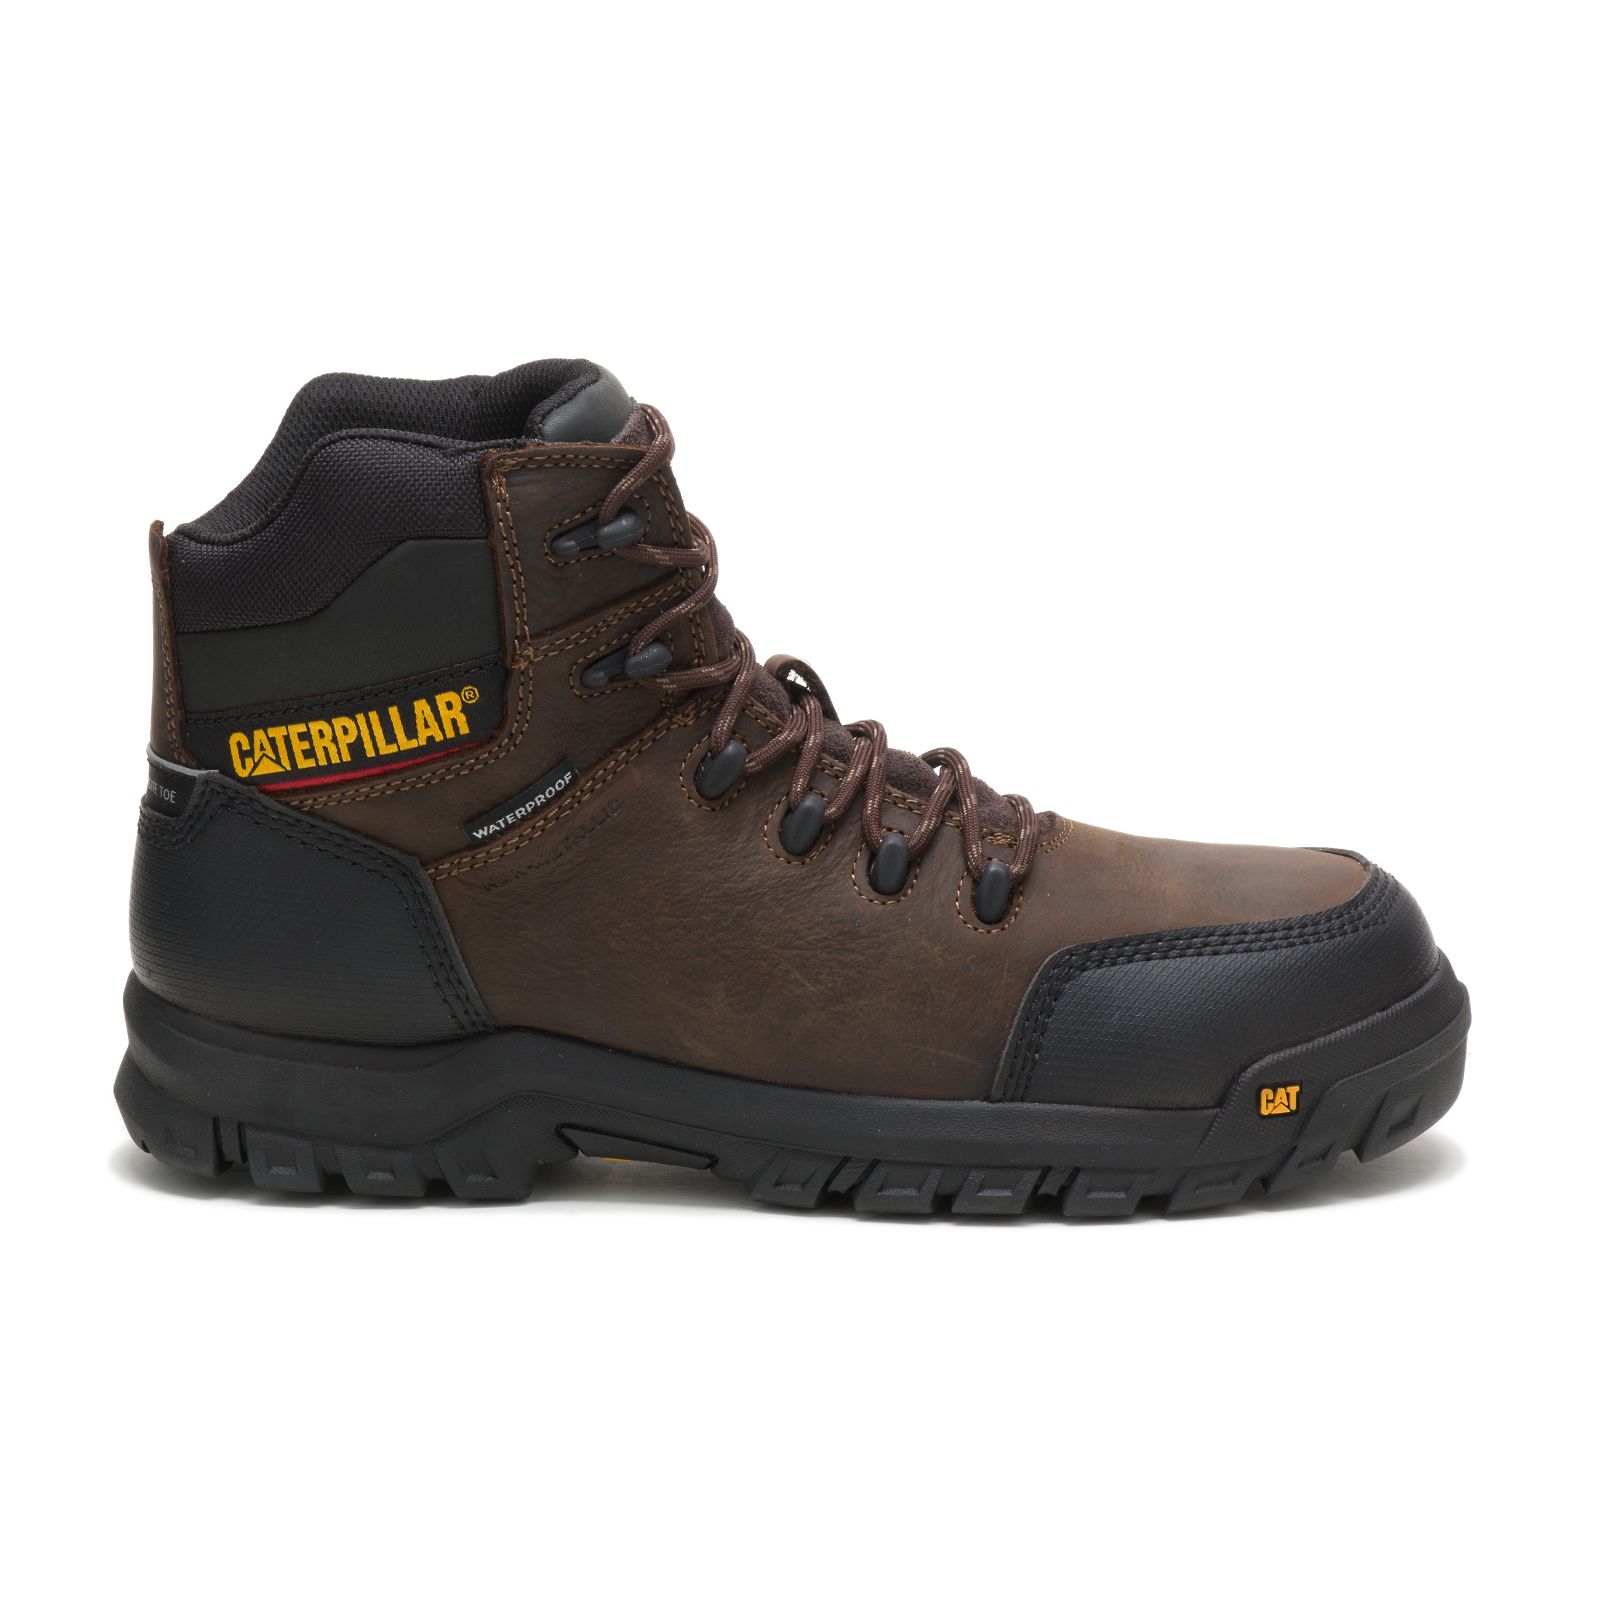 Caterpillar Resorption Waterproof Composite Toe Philippines - Mens Work Boots - Brown 34675OVMZ